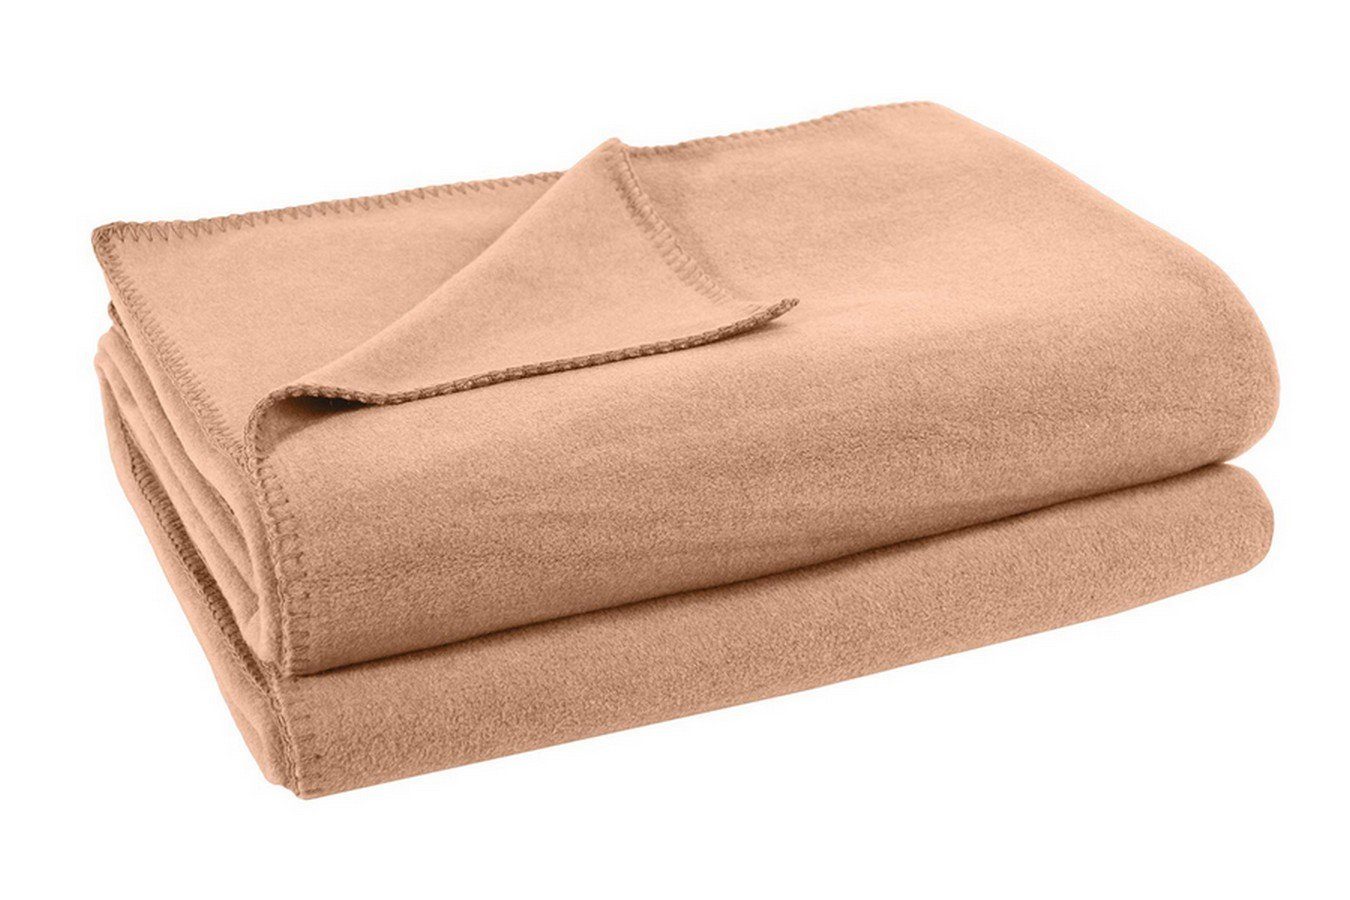 Wohndecke Soft-Fleece Decke 180 sand, x daslagerhaus living 220 cm